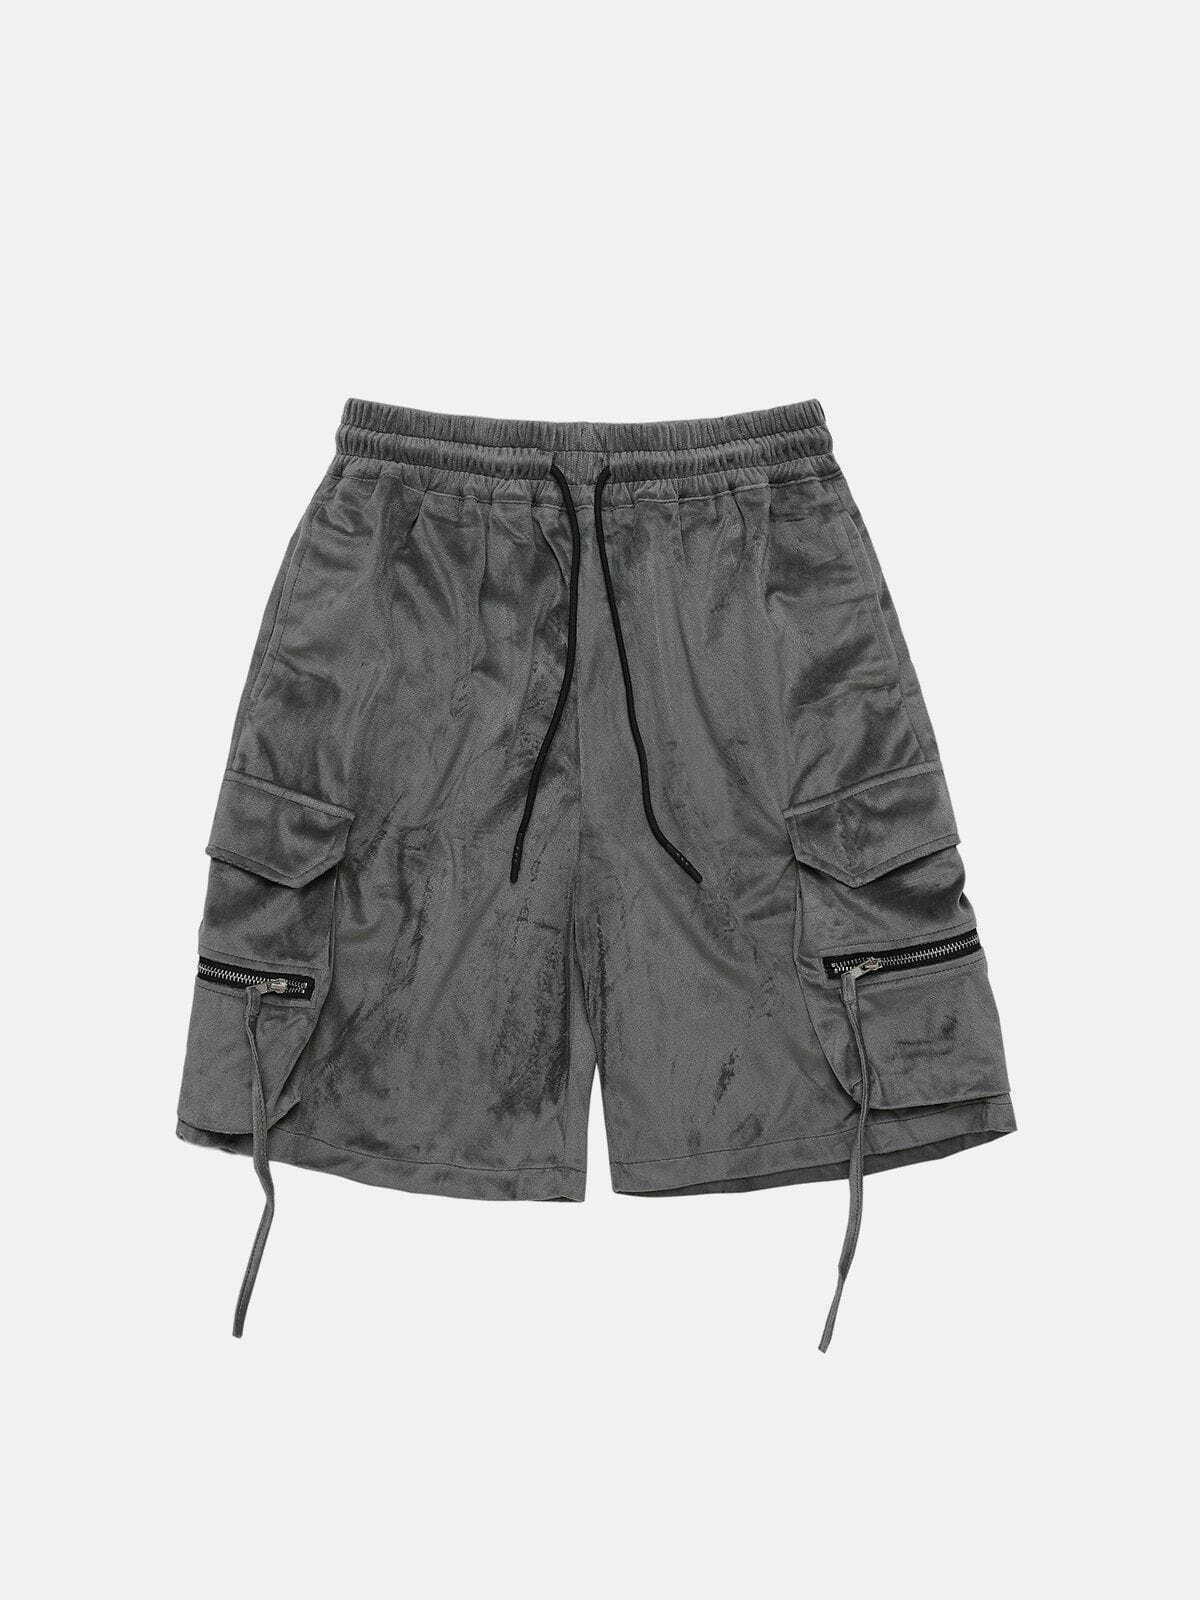 sleek zip up shorts with large pockets   urban trendsetter 7186